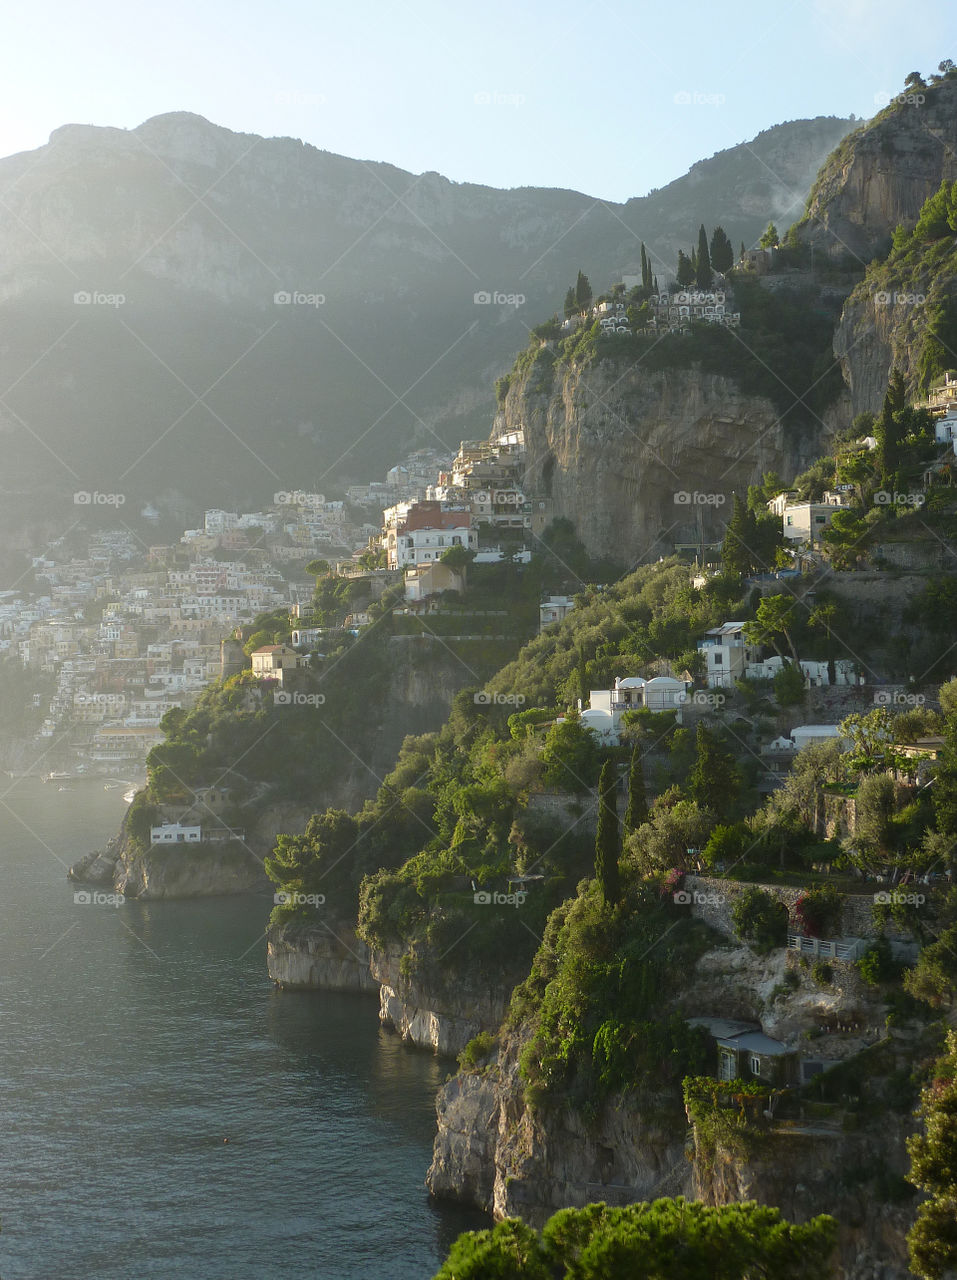 Positano From Arienzo. First evening on the Amalfi coast - pure magic...